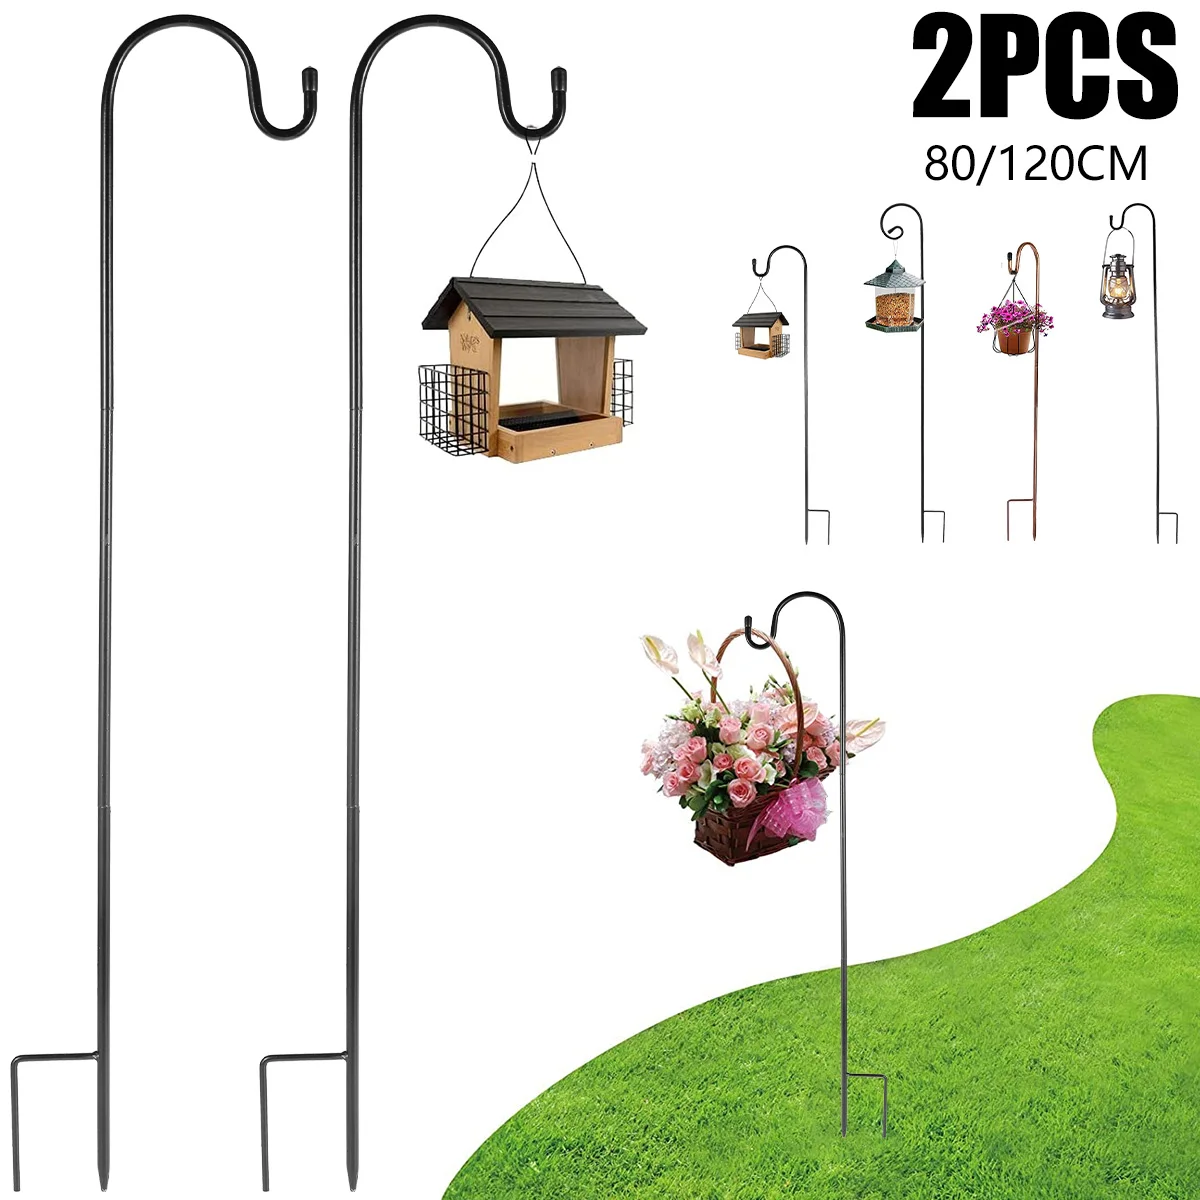 2Pcs Shepherds Hooks Hanging Plant Stake Bird Feeder Flower Pot Stand Outdoor Lantern Iron Hanger Stake Garden lawn Decor